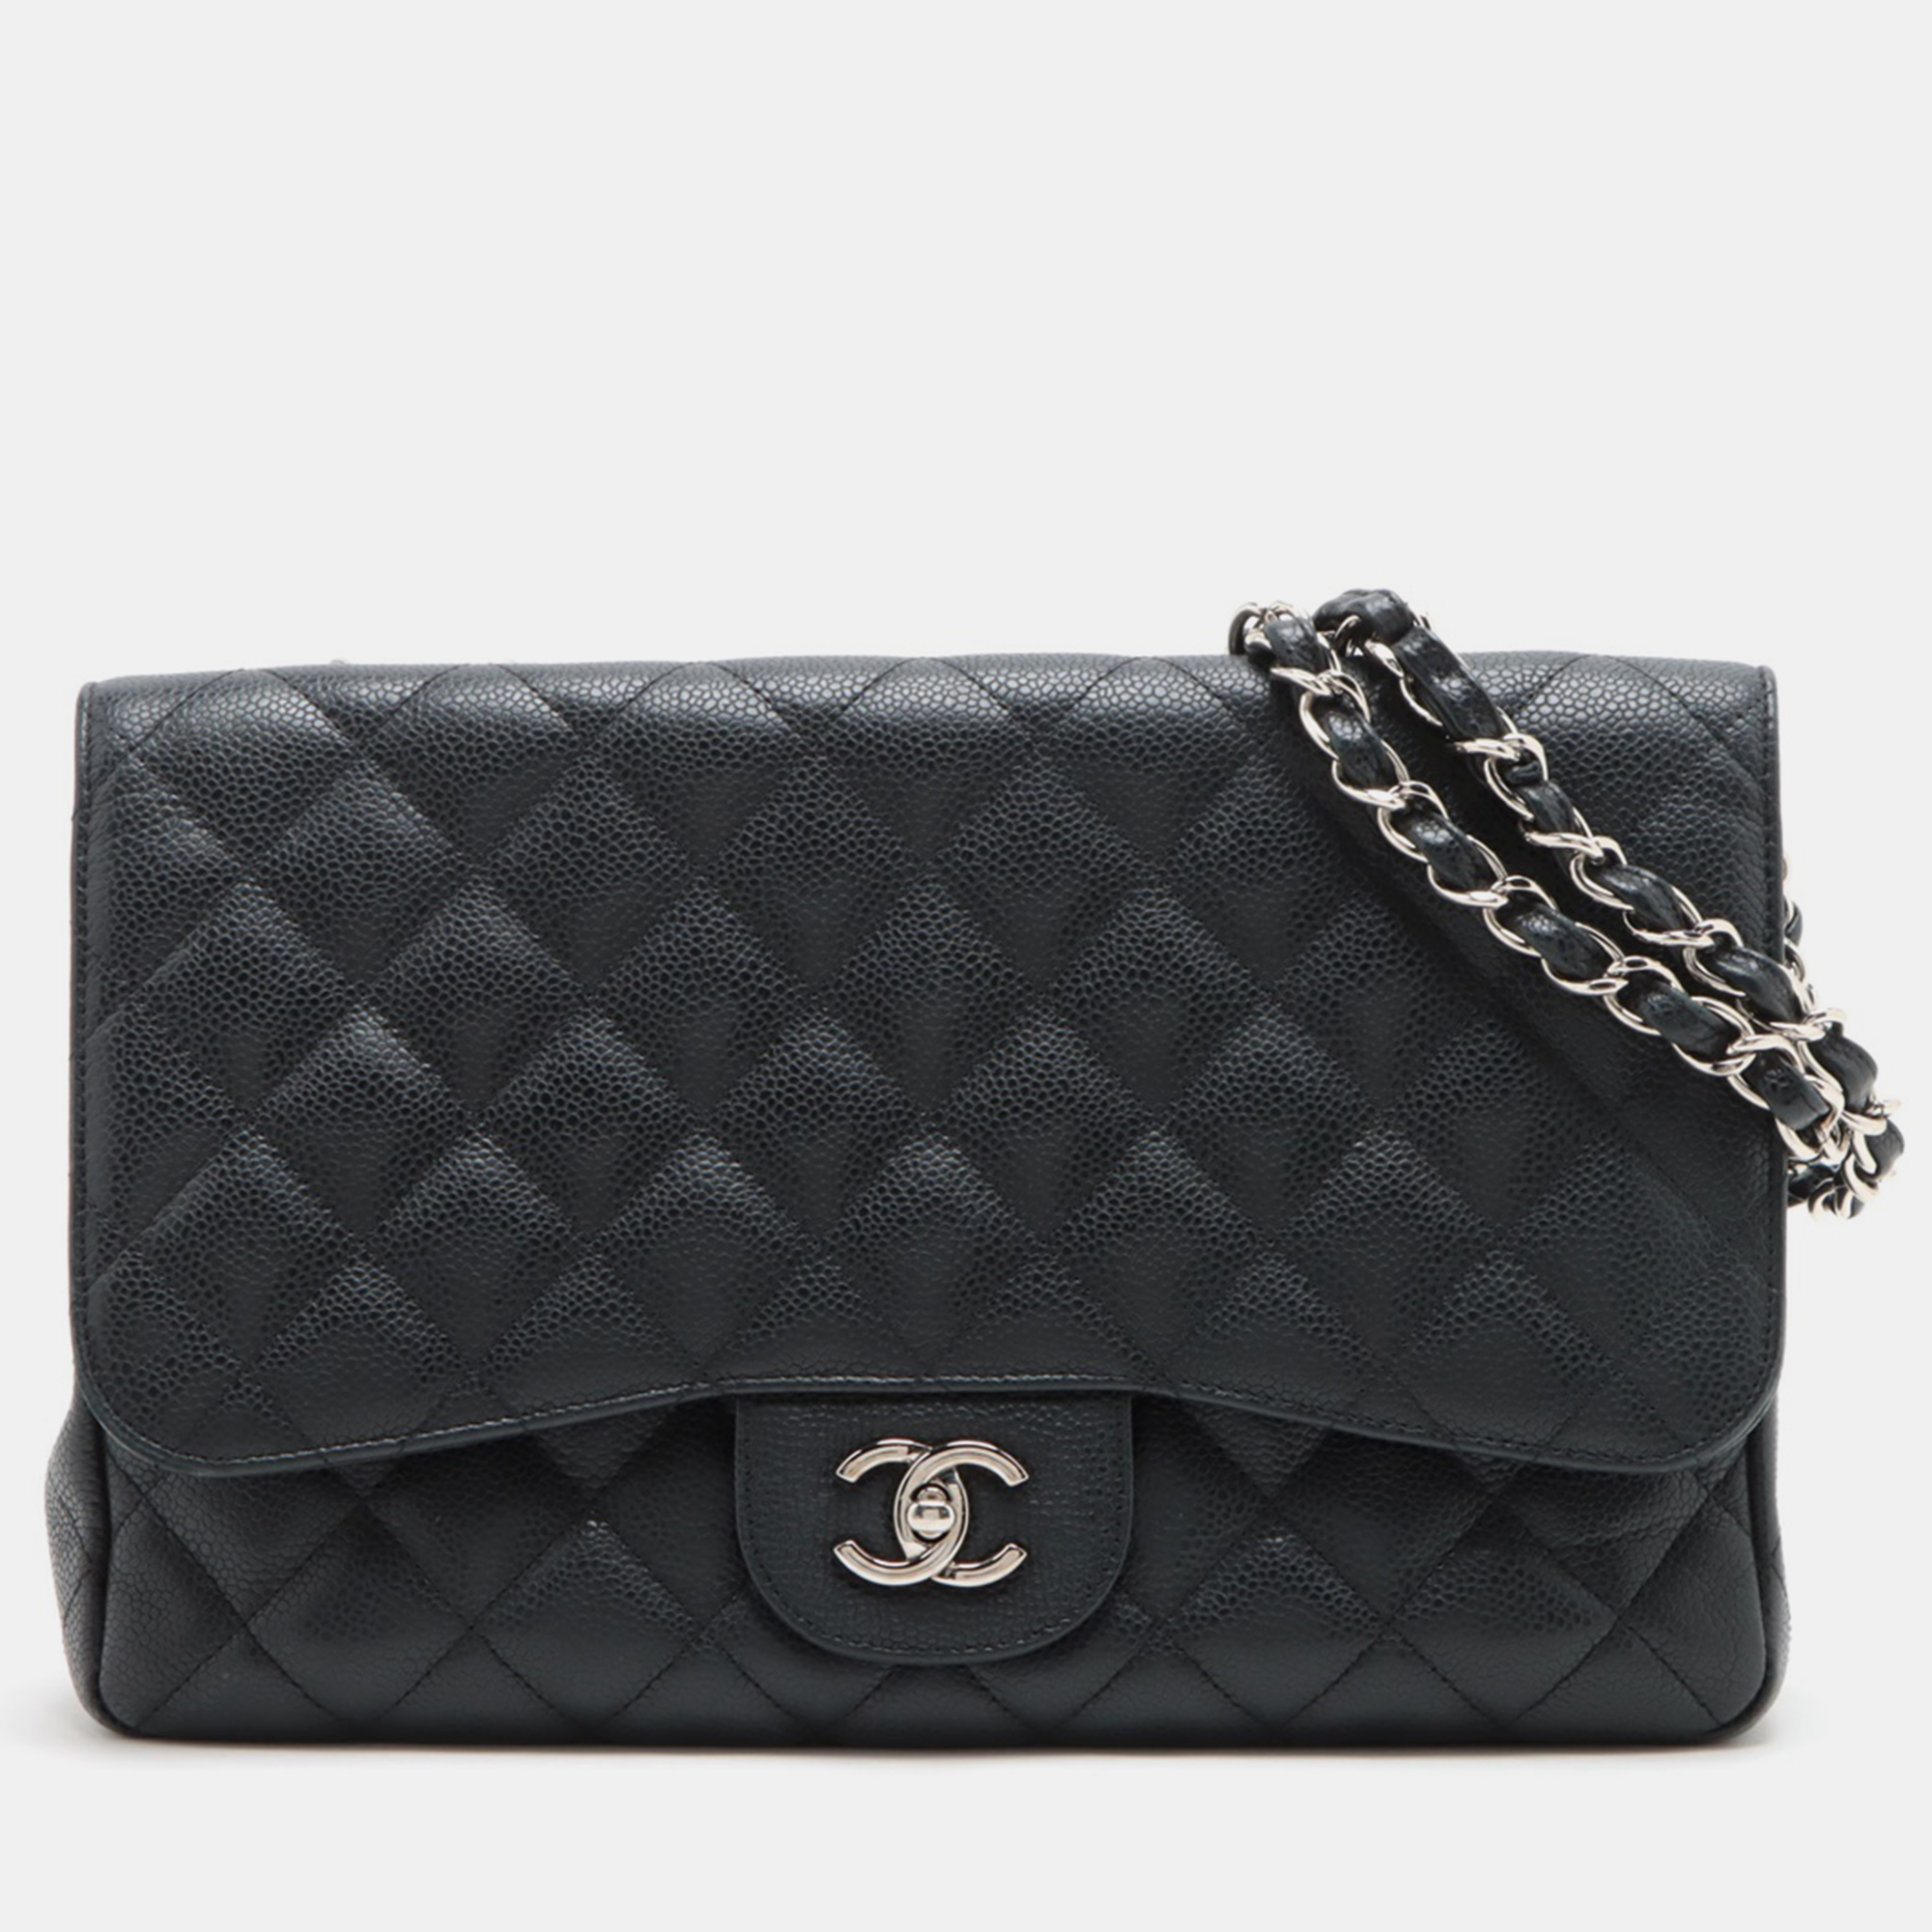 Chanel black caviar leather xl classic double flap shoulder bags